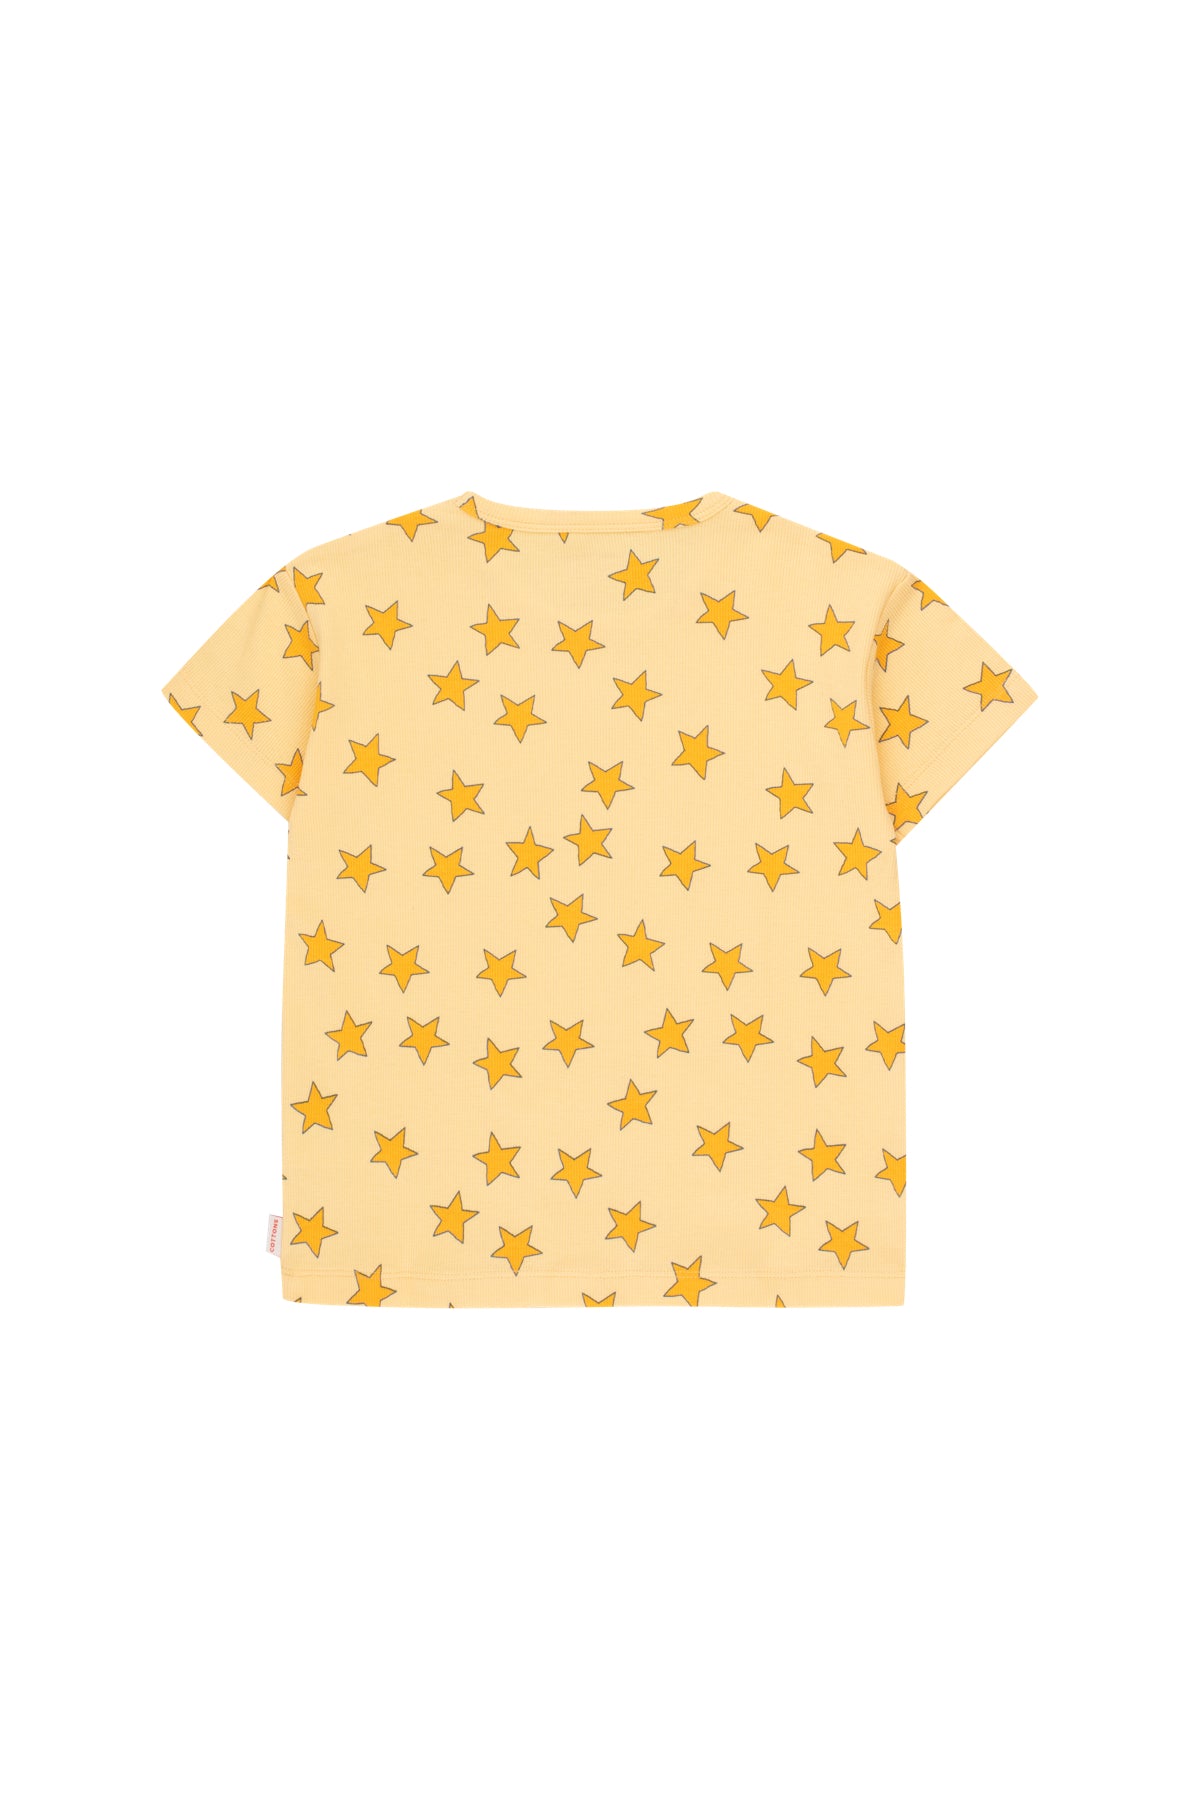 Tiny Cottons - stars tee - mellow yellow